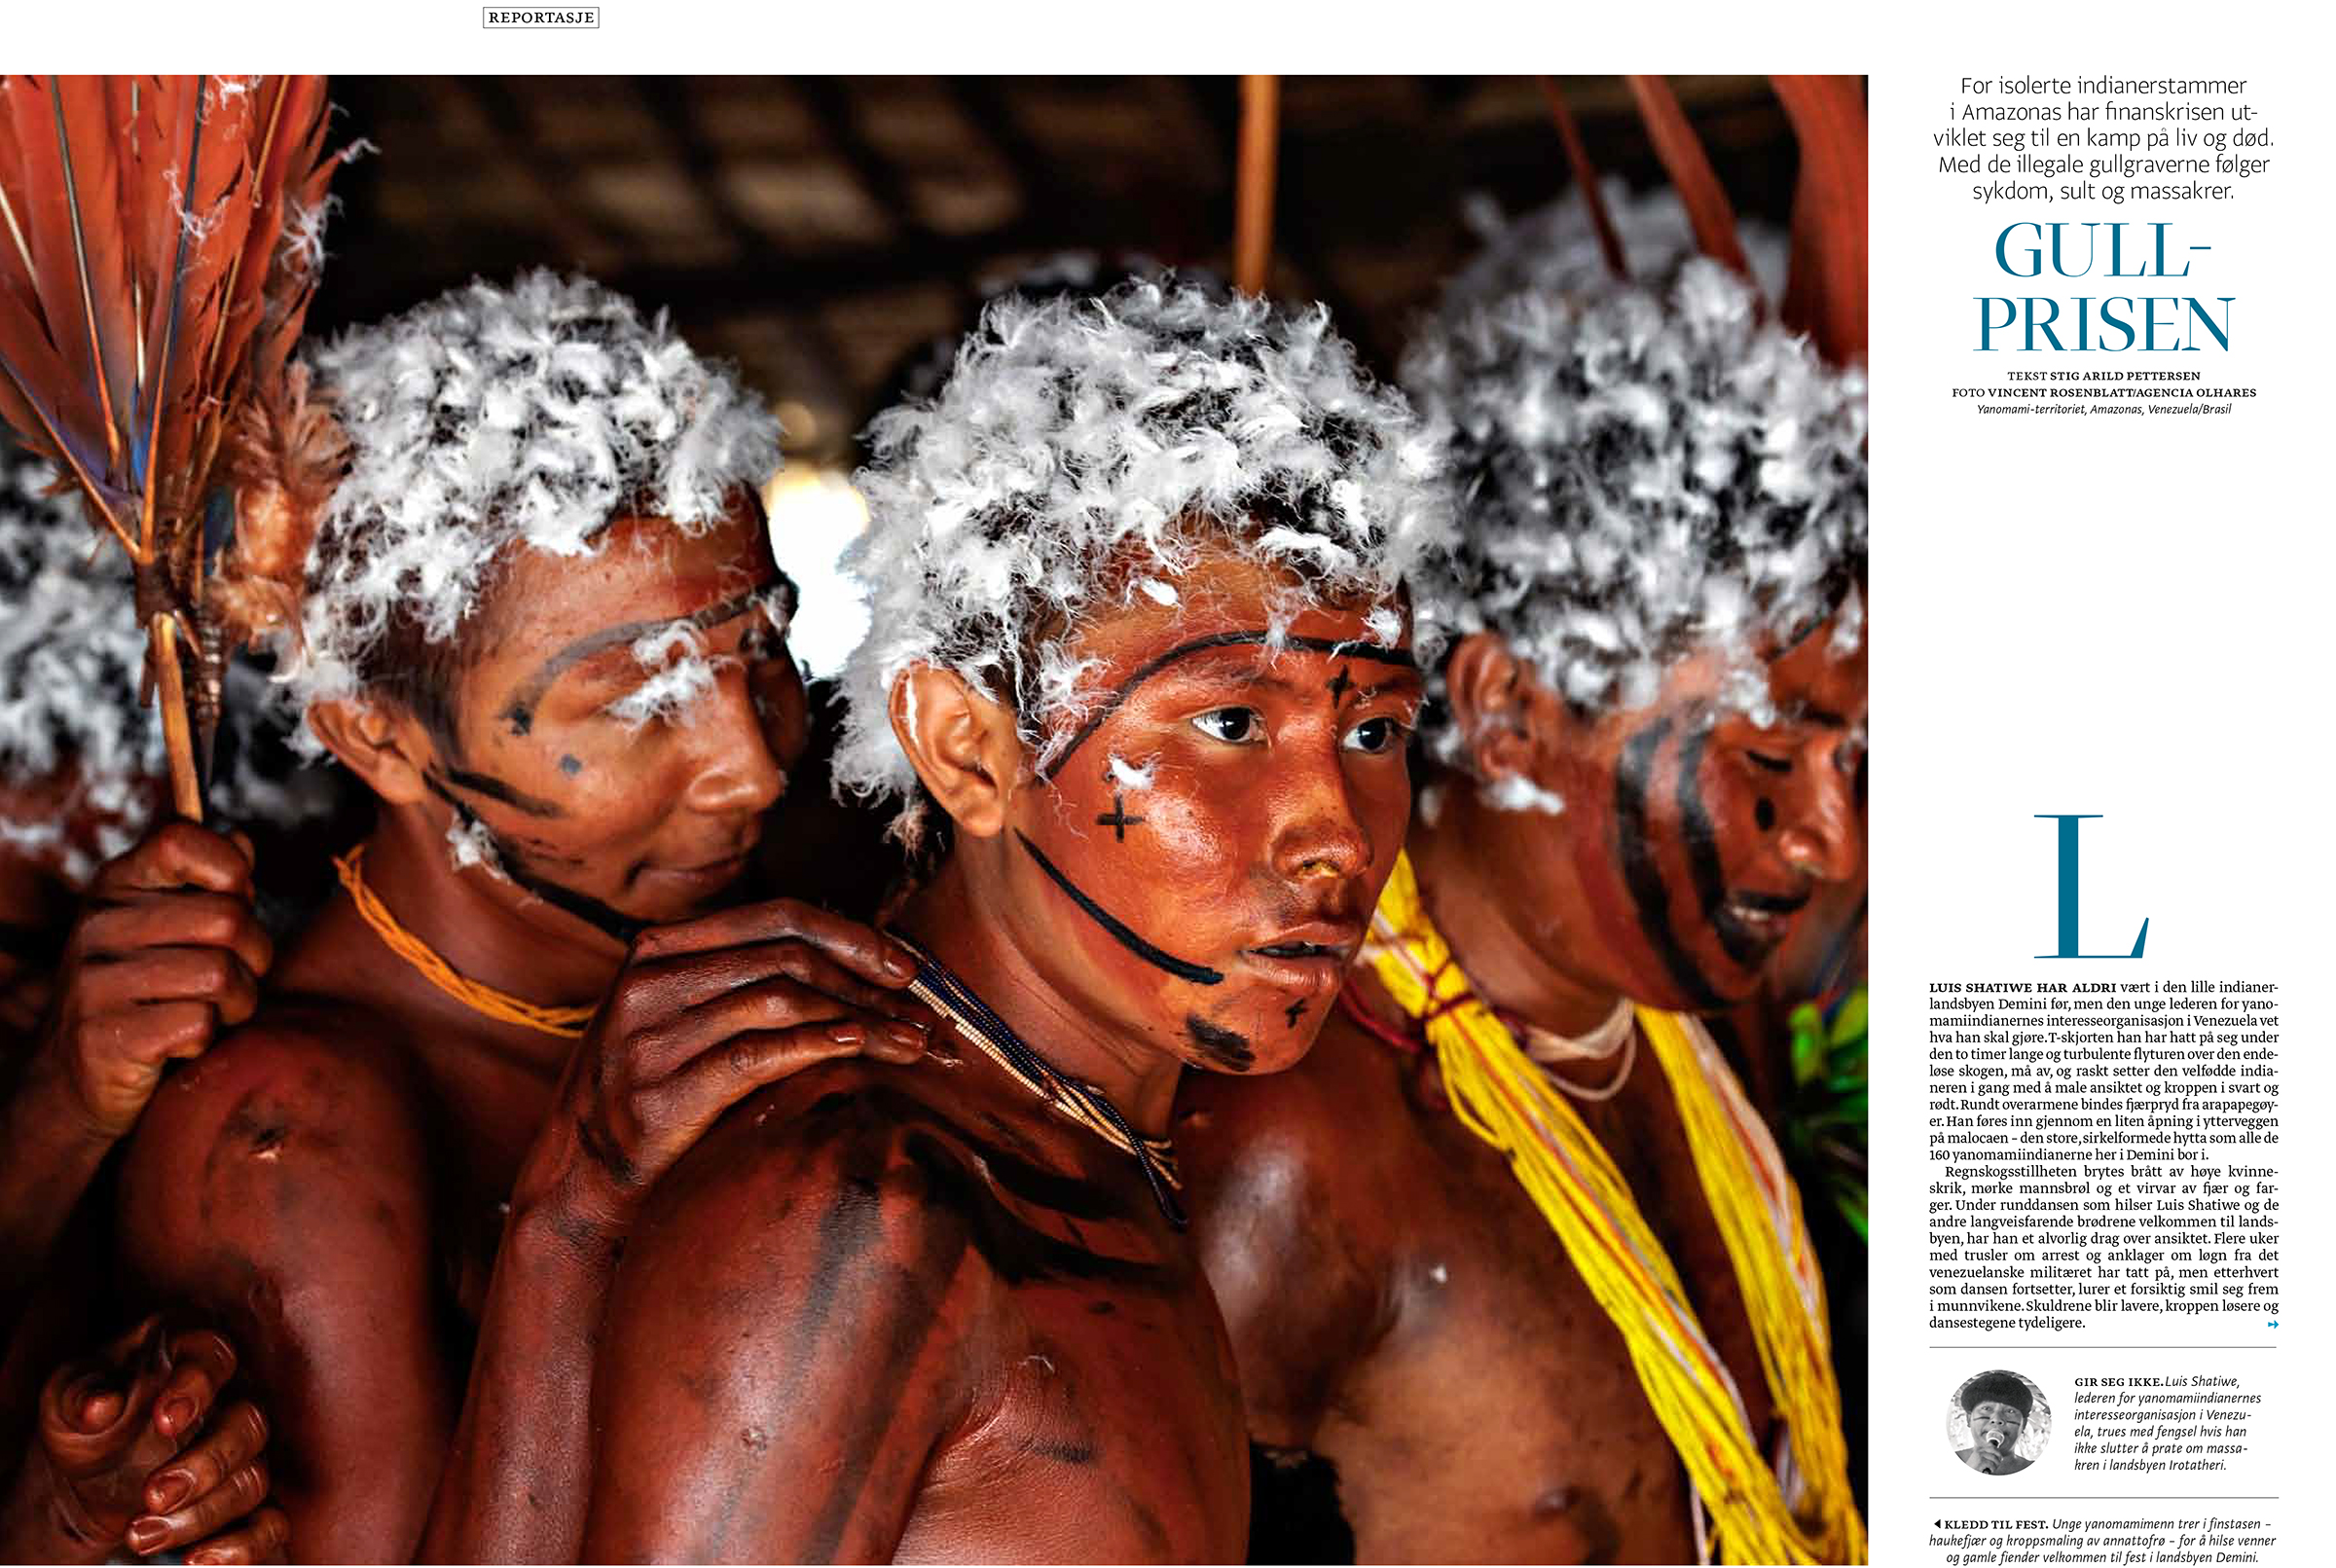 016_Dagens Næringsliv_Yanomamiindianerne 03-16-13 DN Yanomami-indianerne-1.jpg